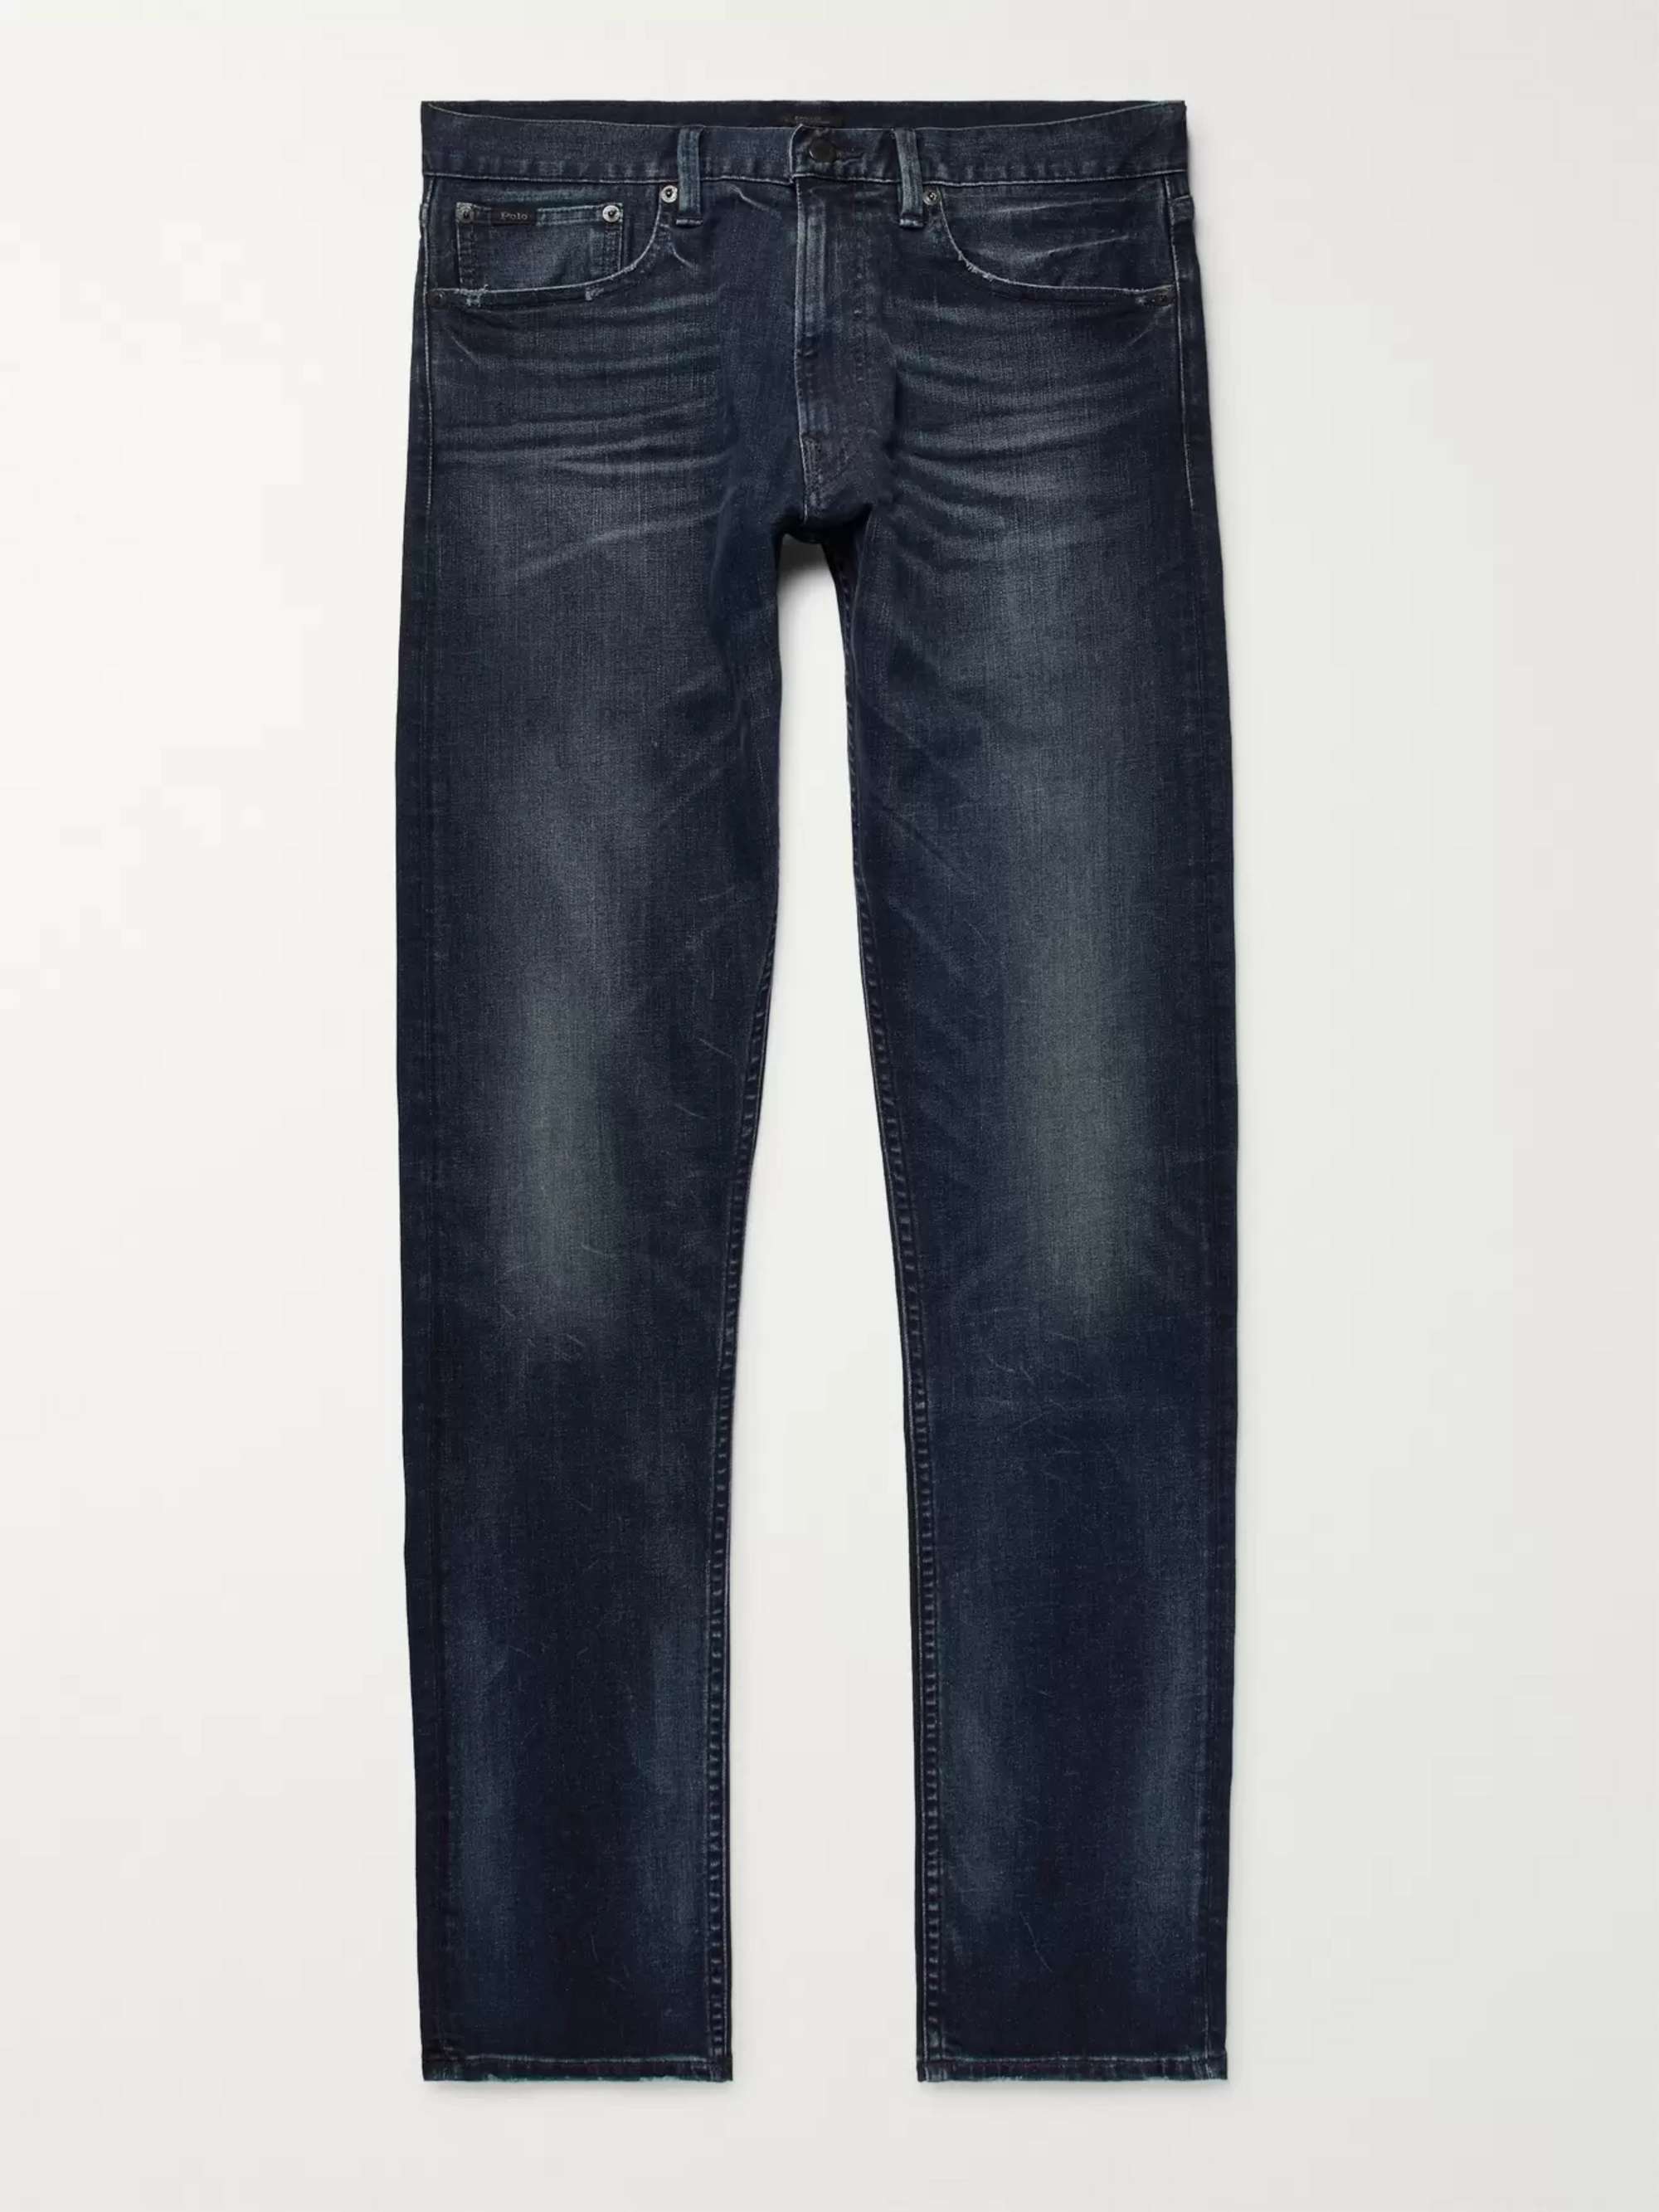 Polo Ralph Lauren Jeans Mens 34 x 34 Sullivan Slim Distressed Grey